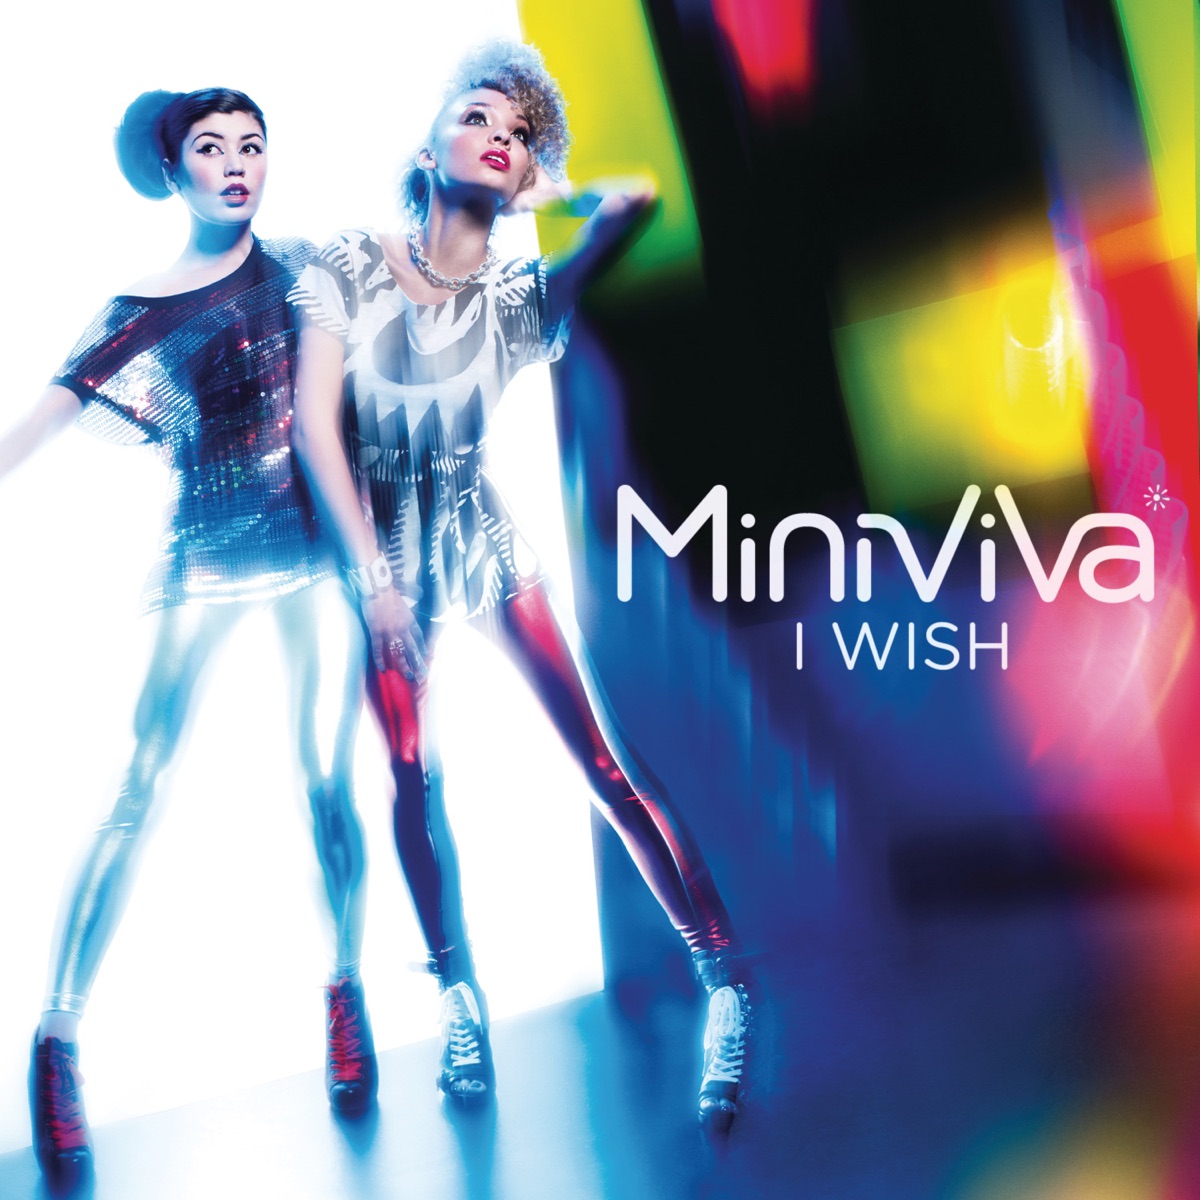 Mini Viva — I Wish cover artwork